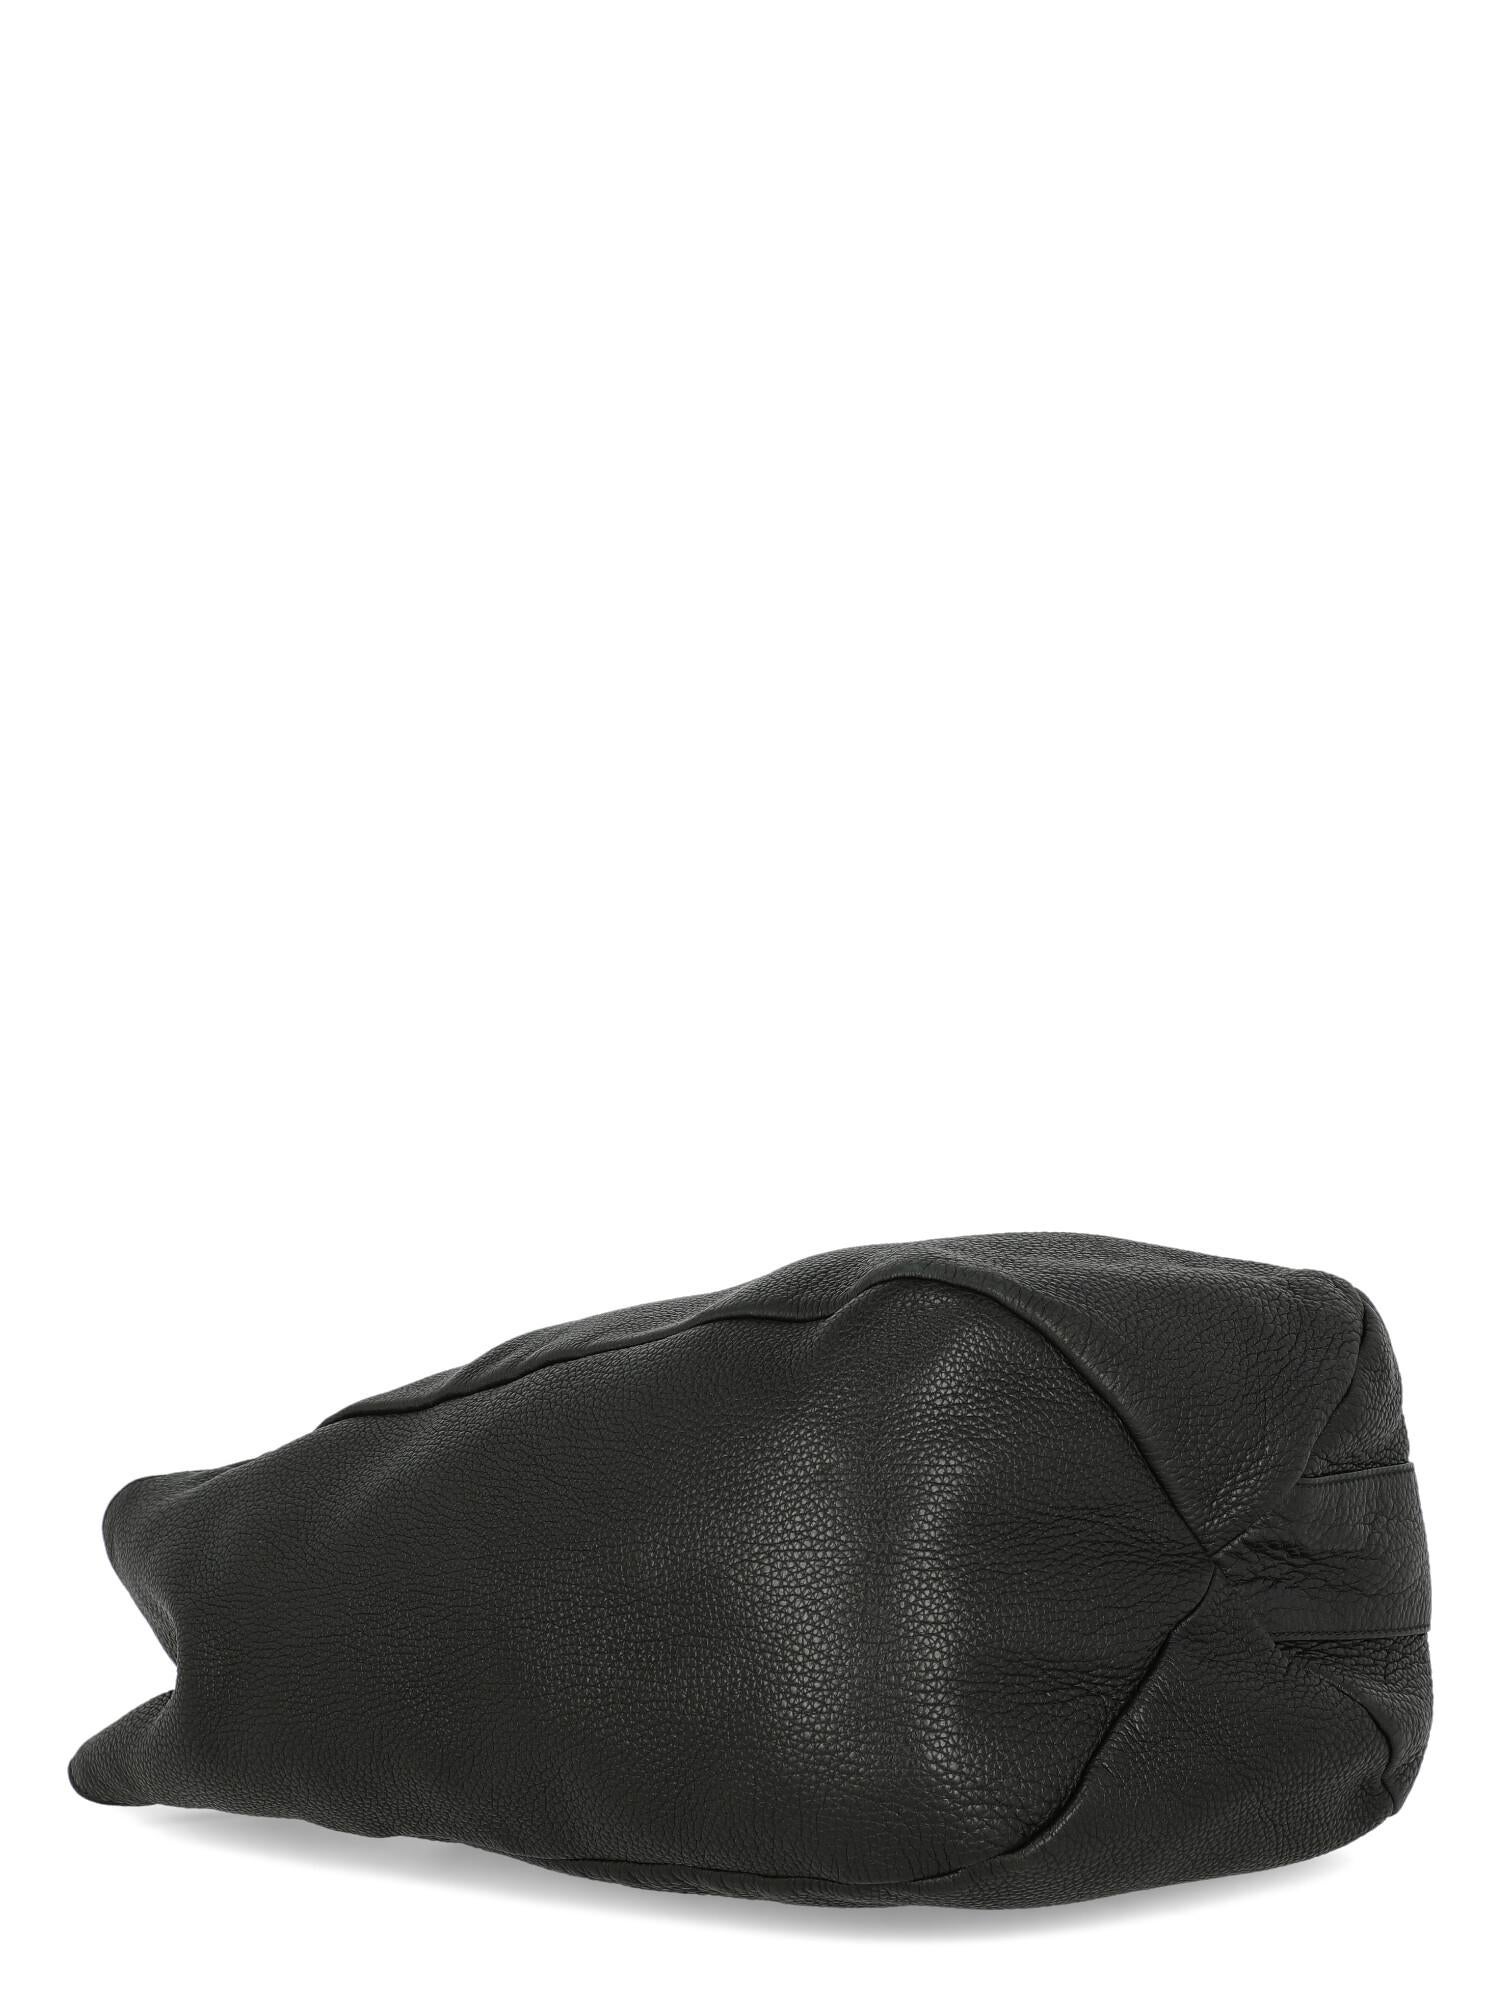 Gucci  Women   Shoulder bags   Black Leather  For Sale 1